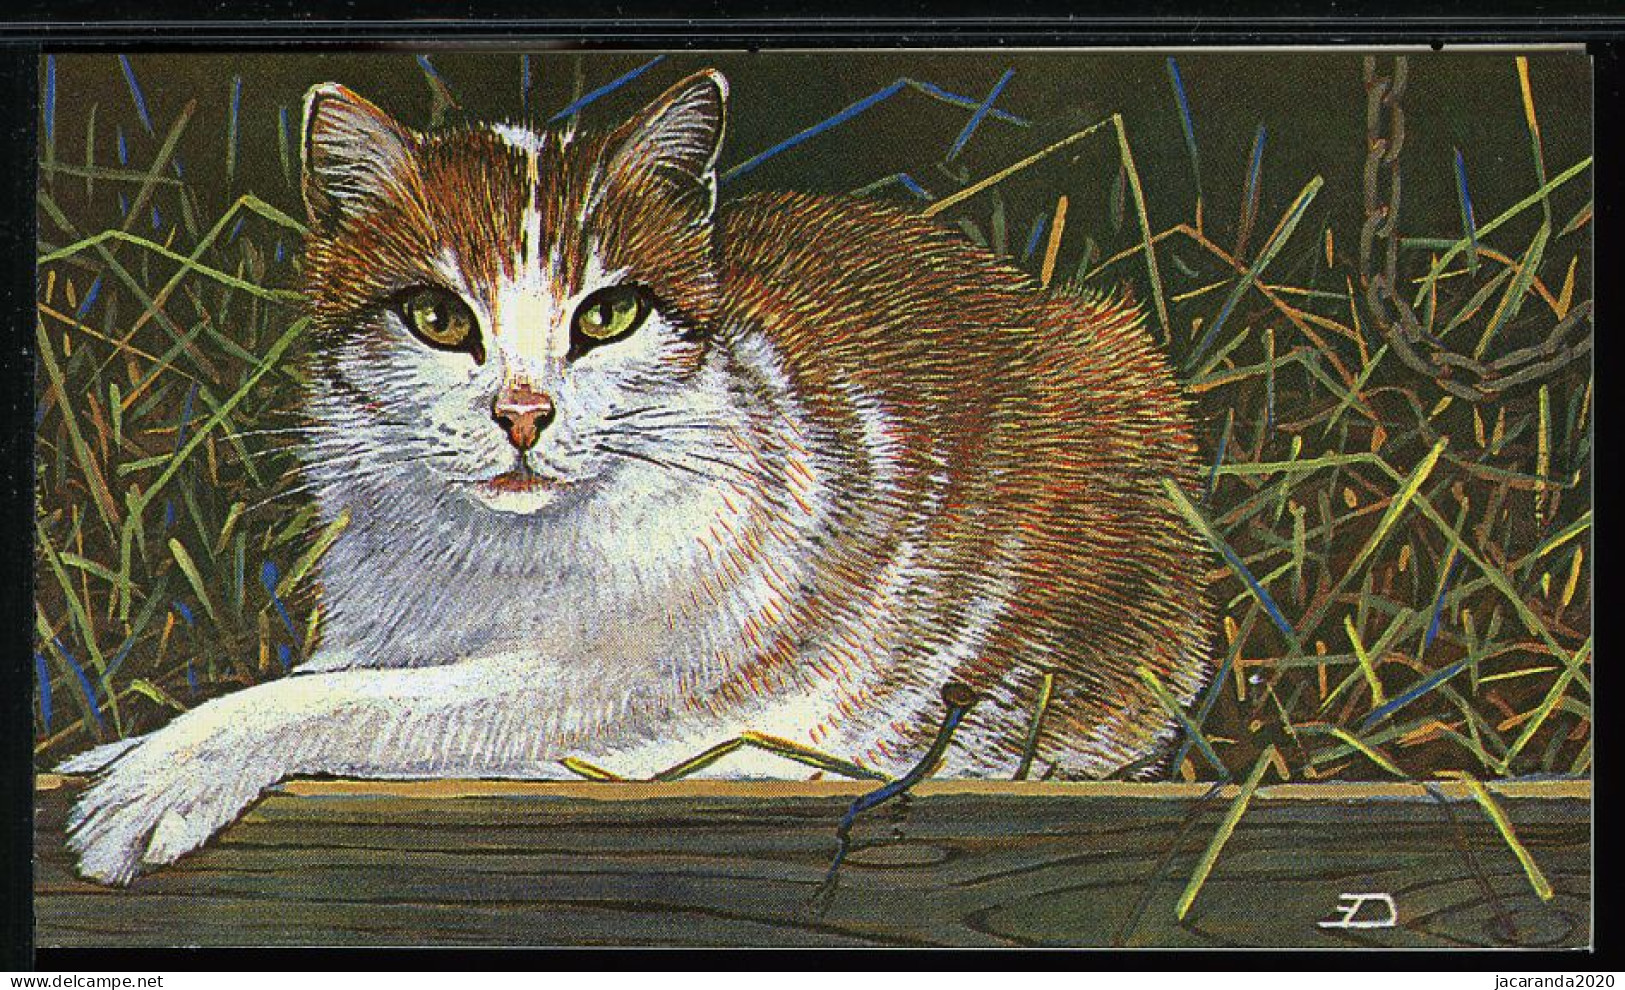 België B24 - Natuur - Europese Katten - Chats Européens - 1993 - 1953-2006 Modernos [B]